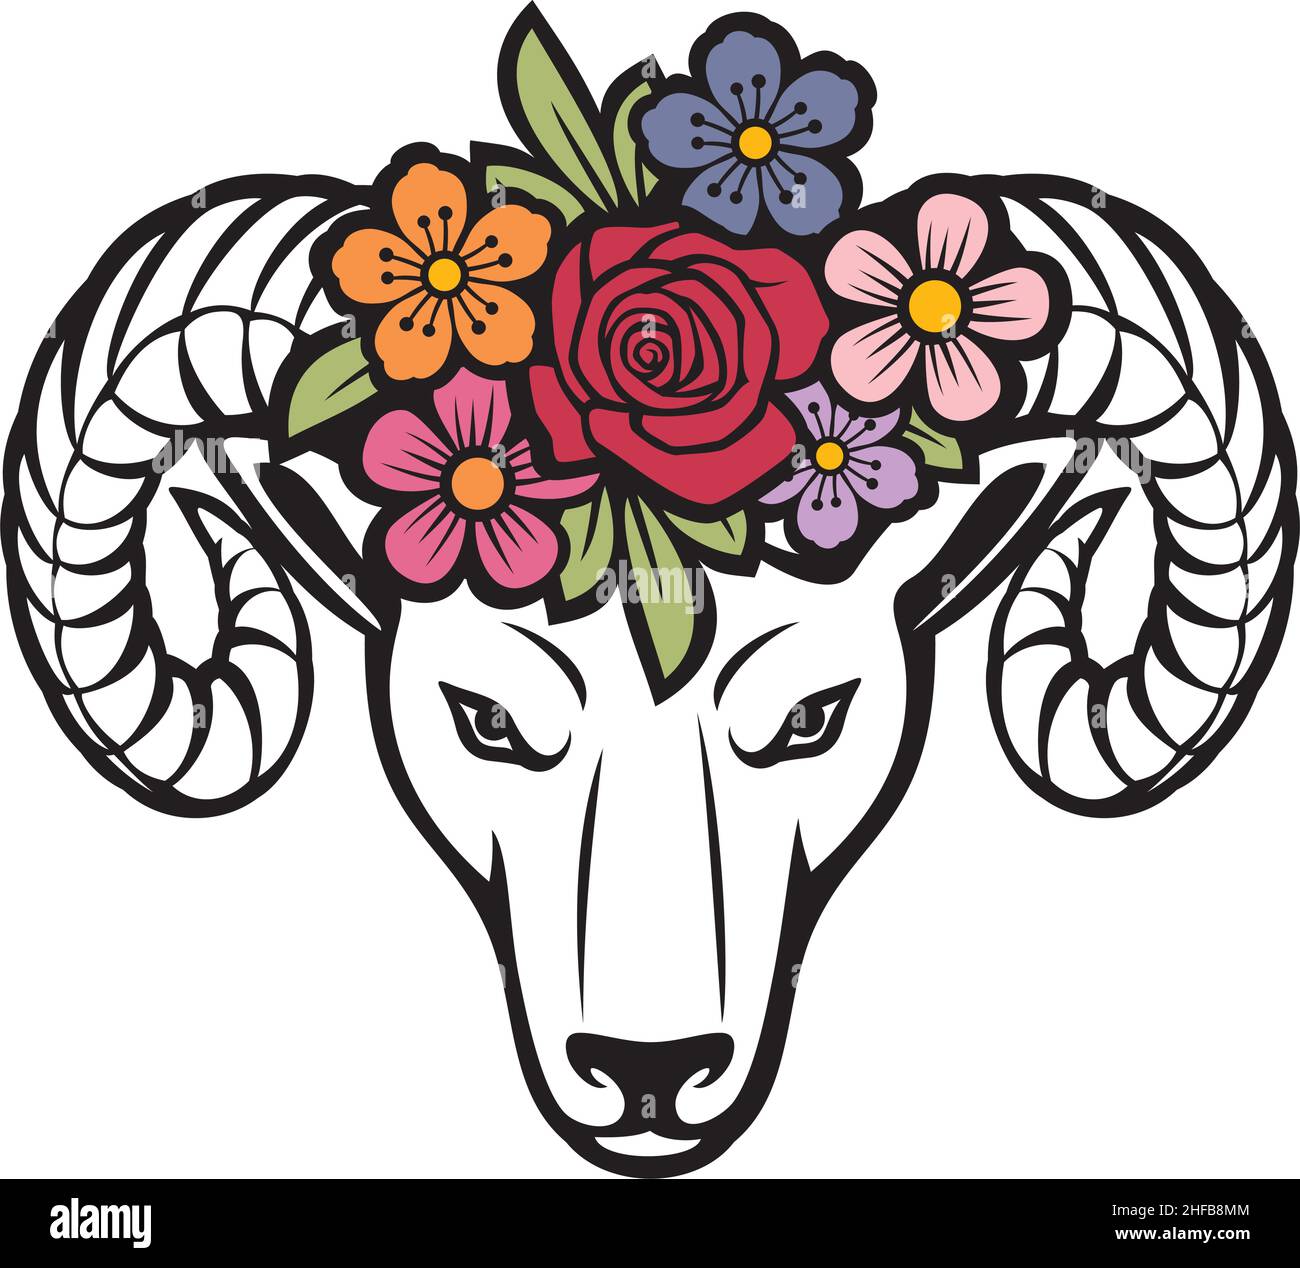 Ram head with flowers (vector illustration) Stock Vector